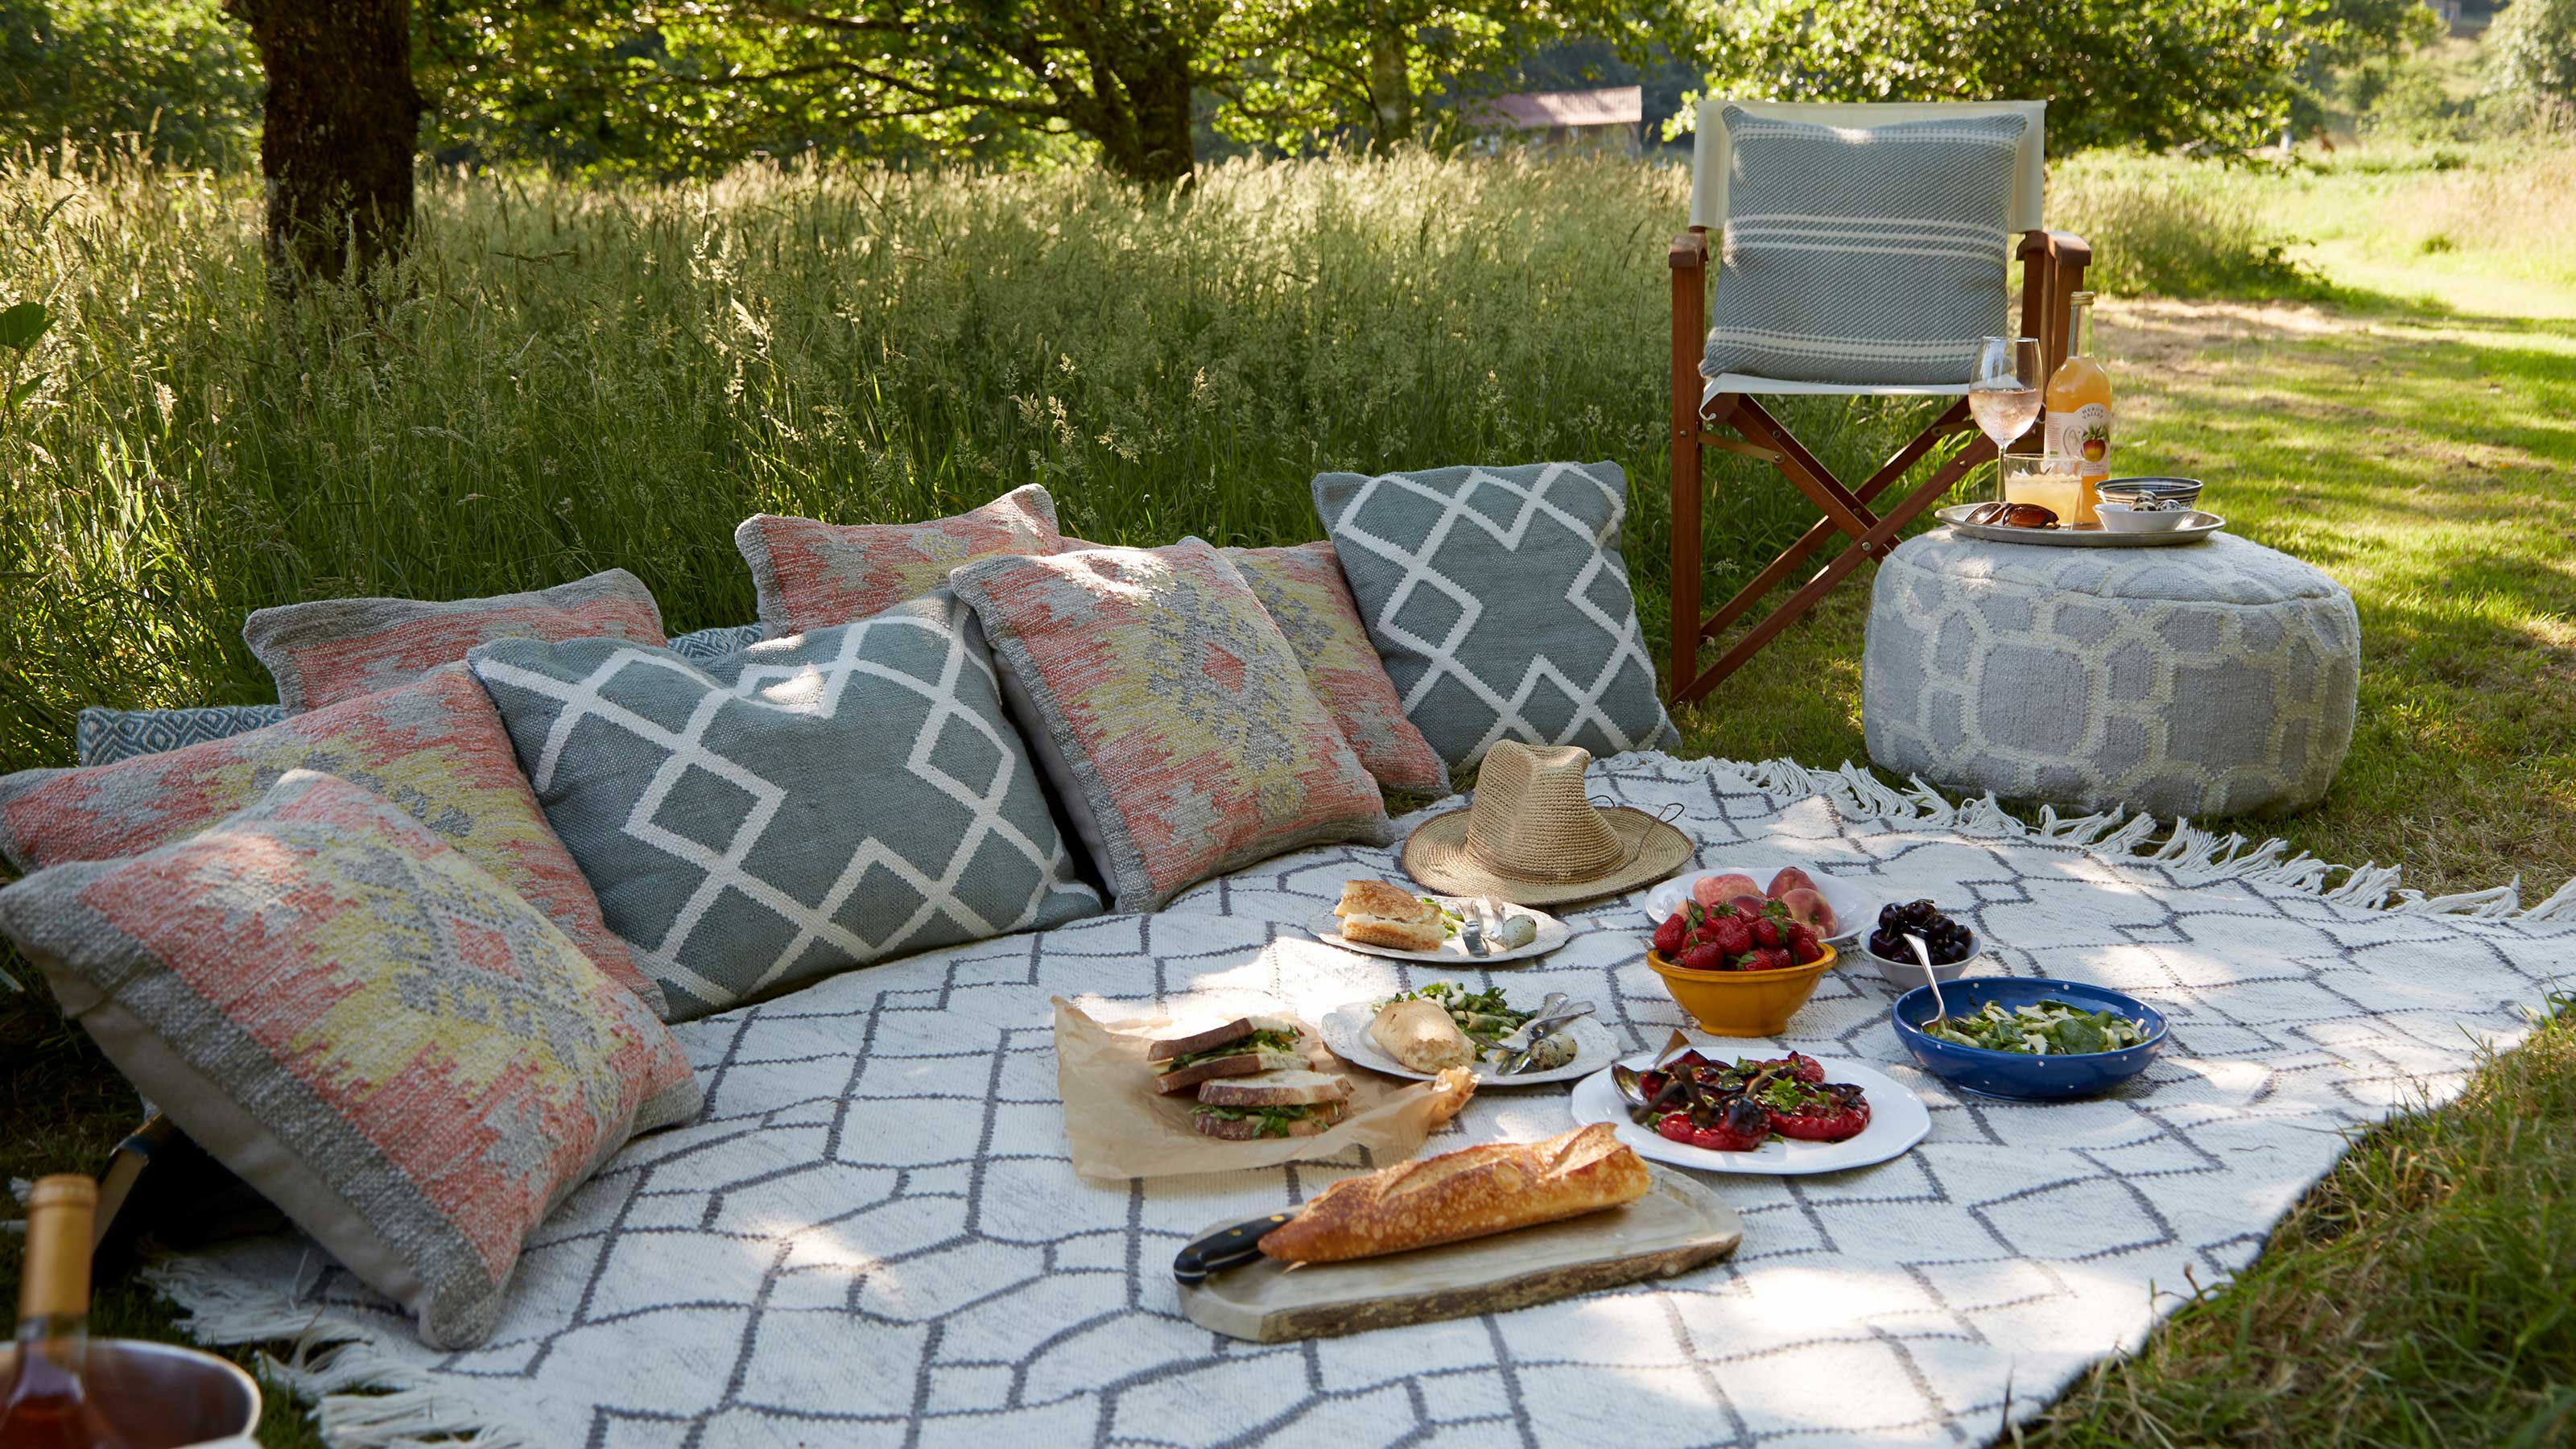 Deformar Pantalones semiconductor Garden picnic ideas: 11 ways to enjoy laid-back dining | Gardeningetc